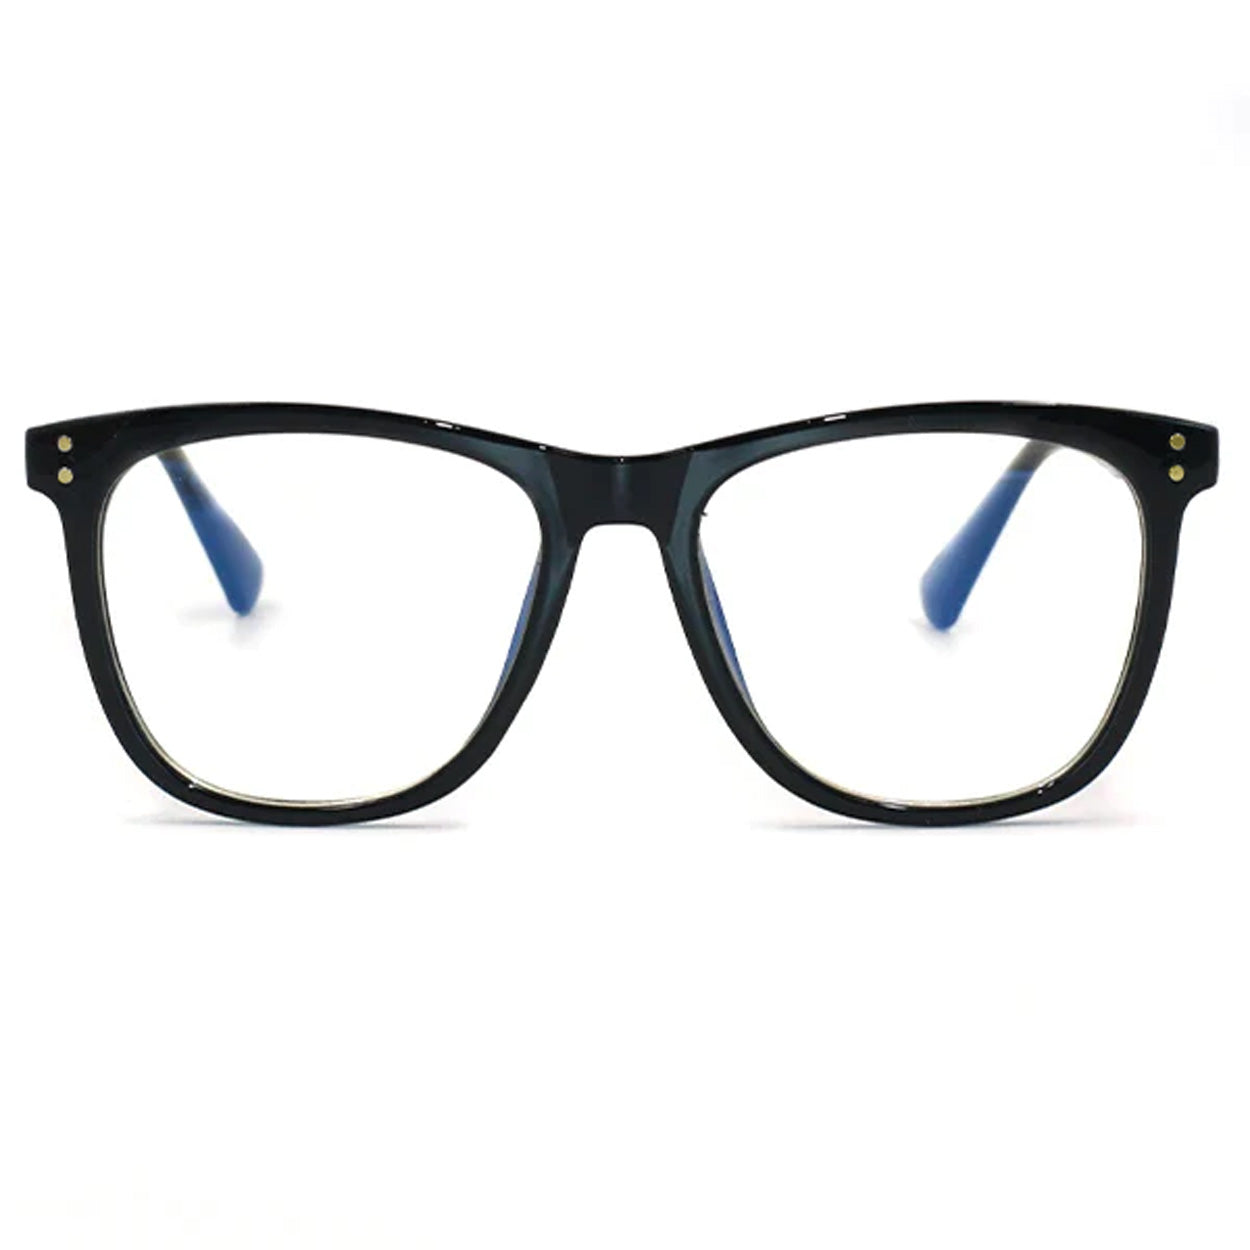 Women's Blue Light Glasses - Computer Glasses | TopFoxx